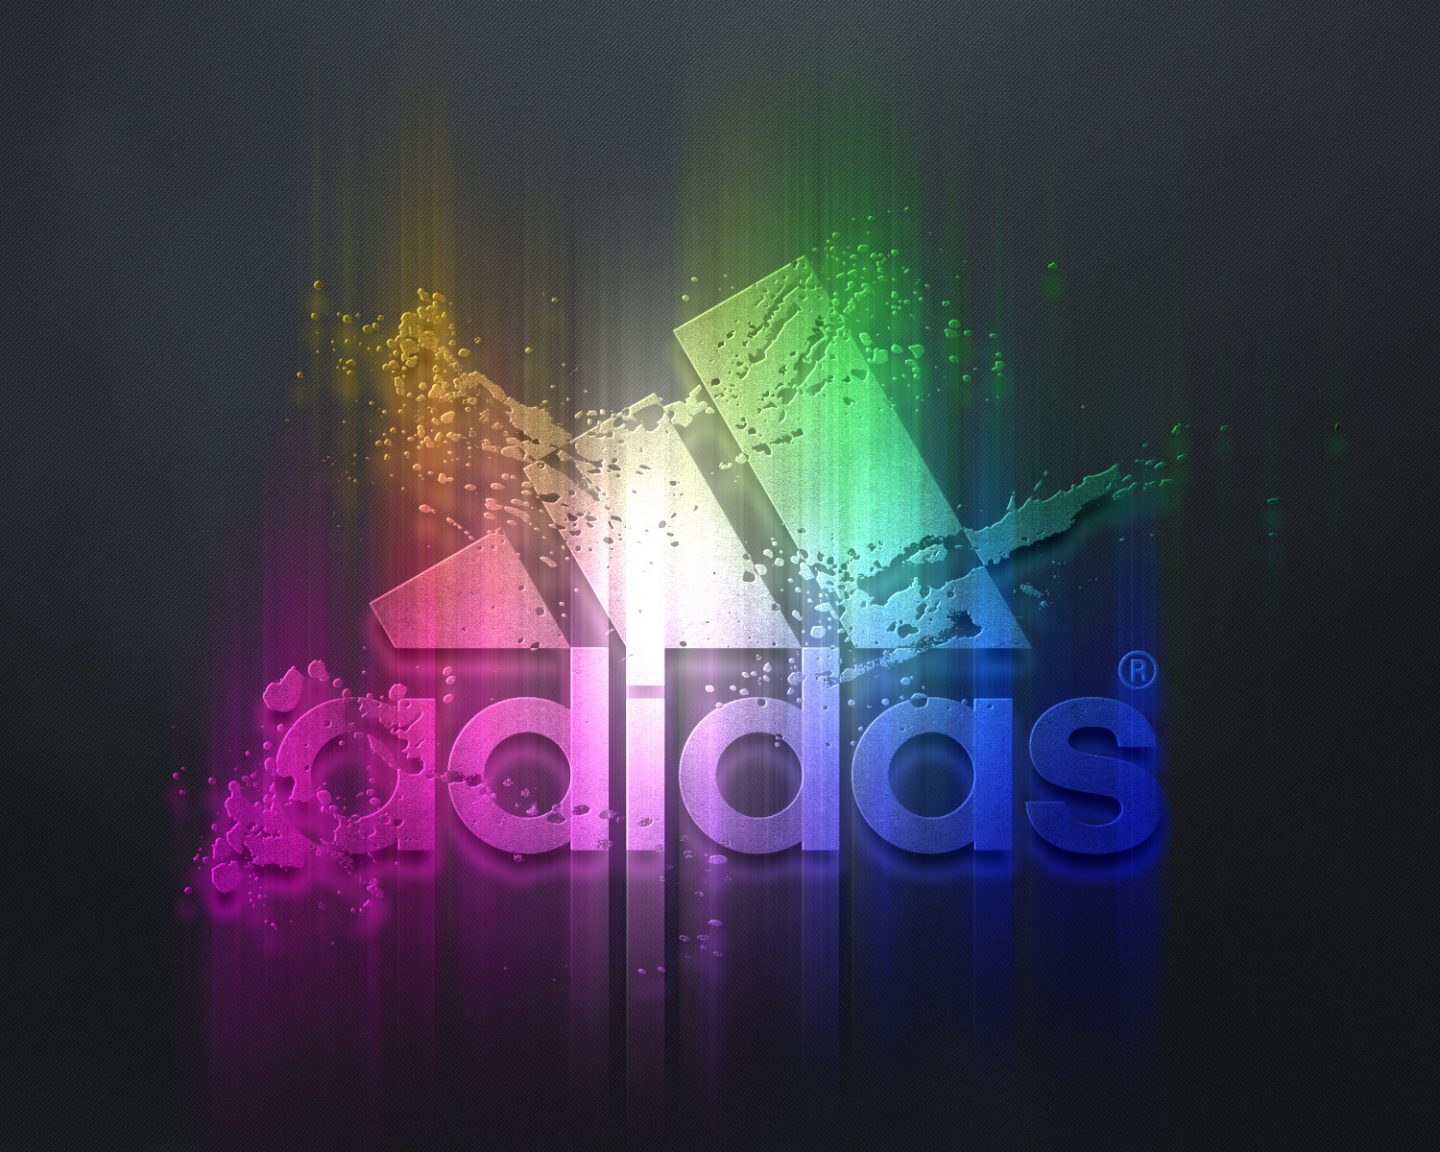 adidas colorful logo